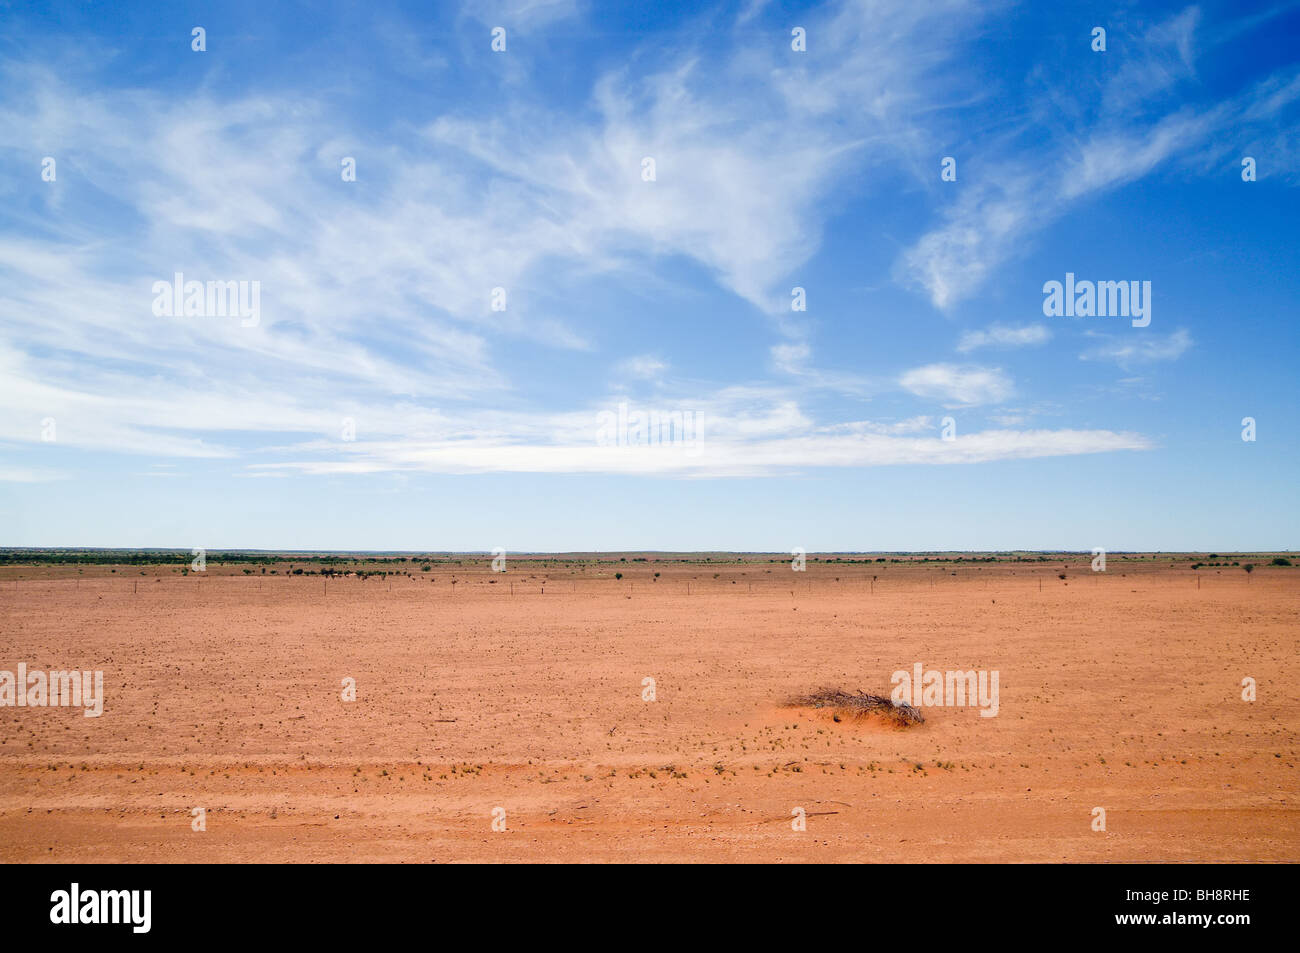 great image of the australian red desert Stock Photo